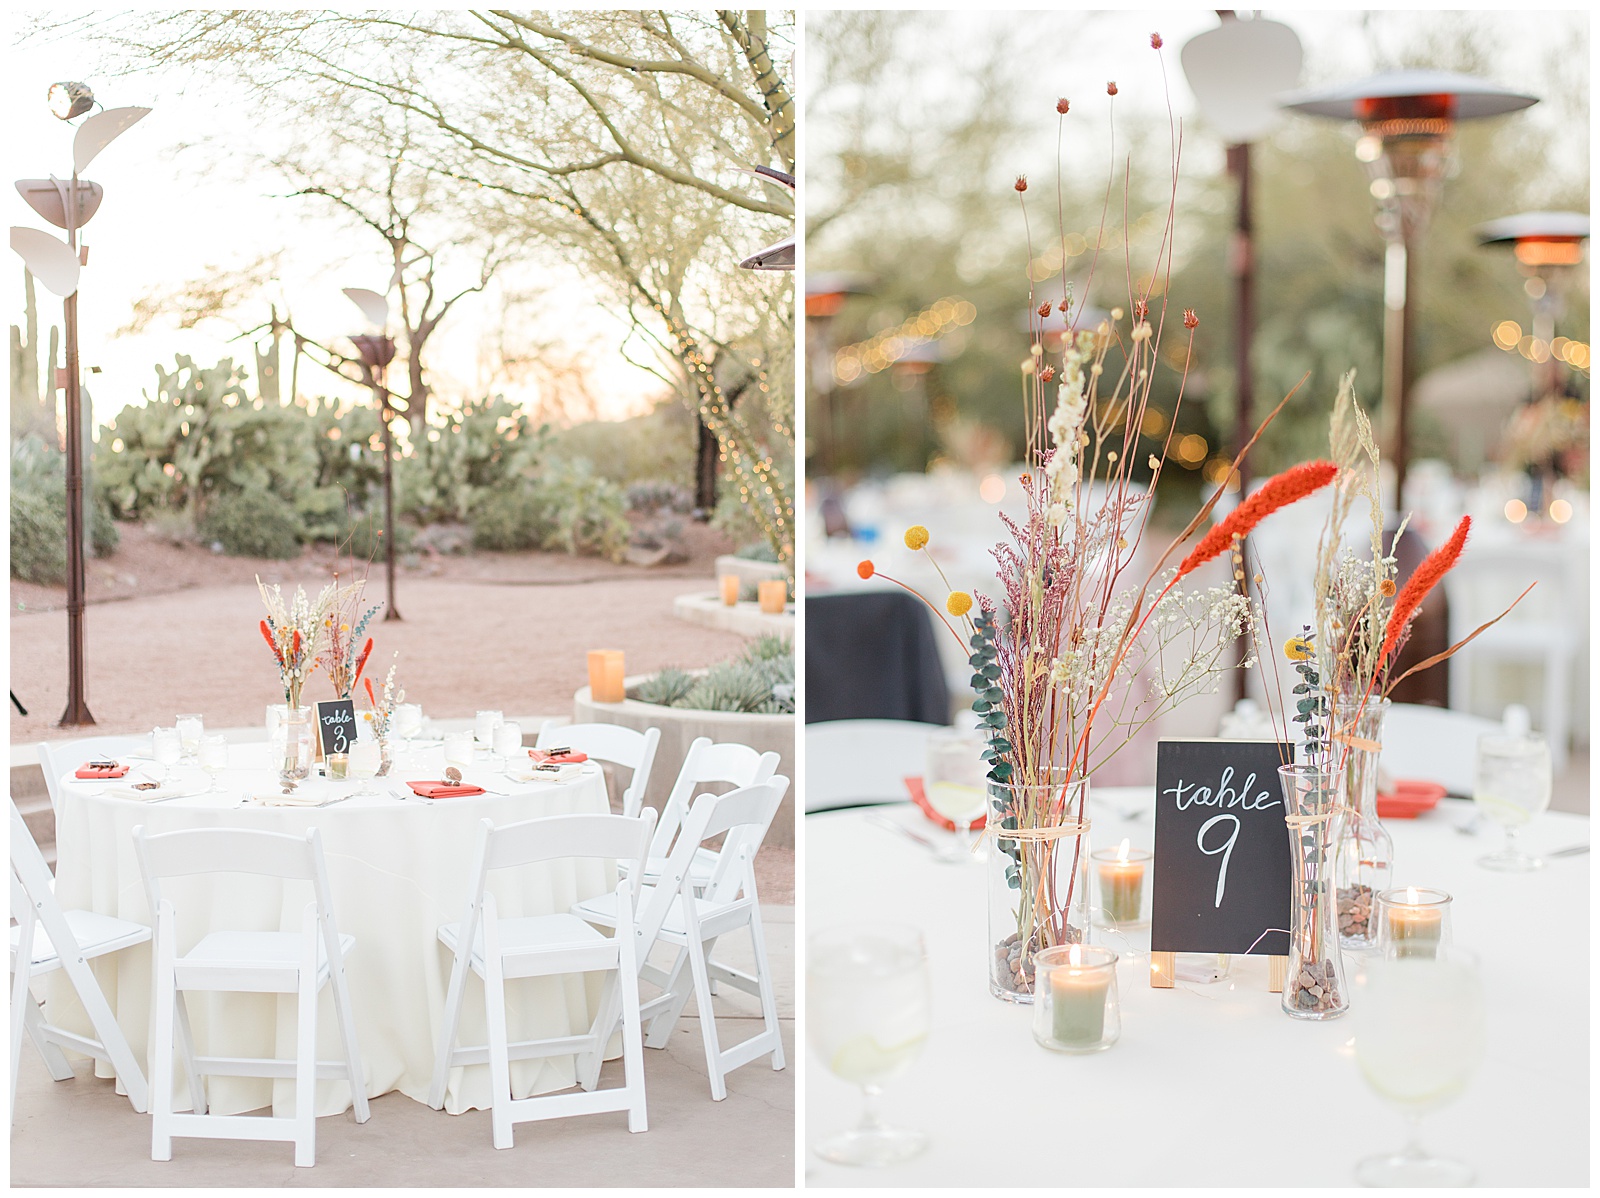 Table decor at a Desert Botanical Gardens wedding.